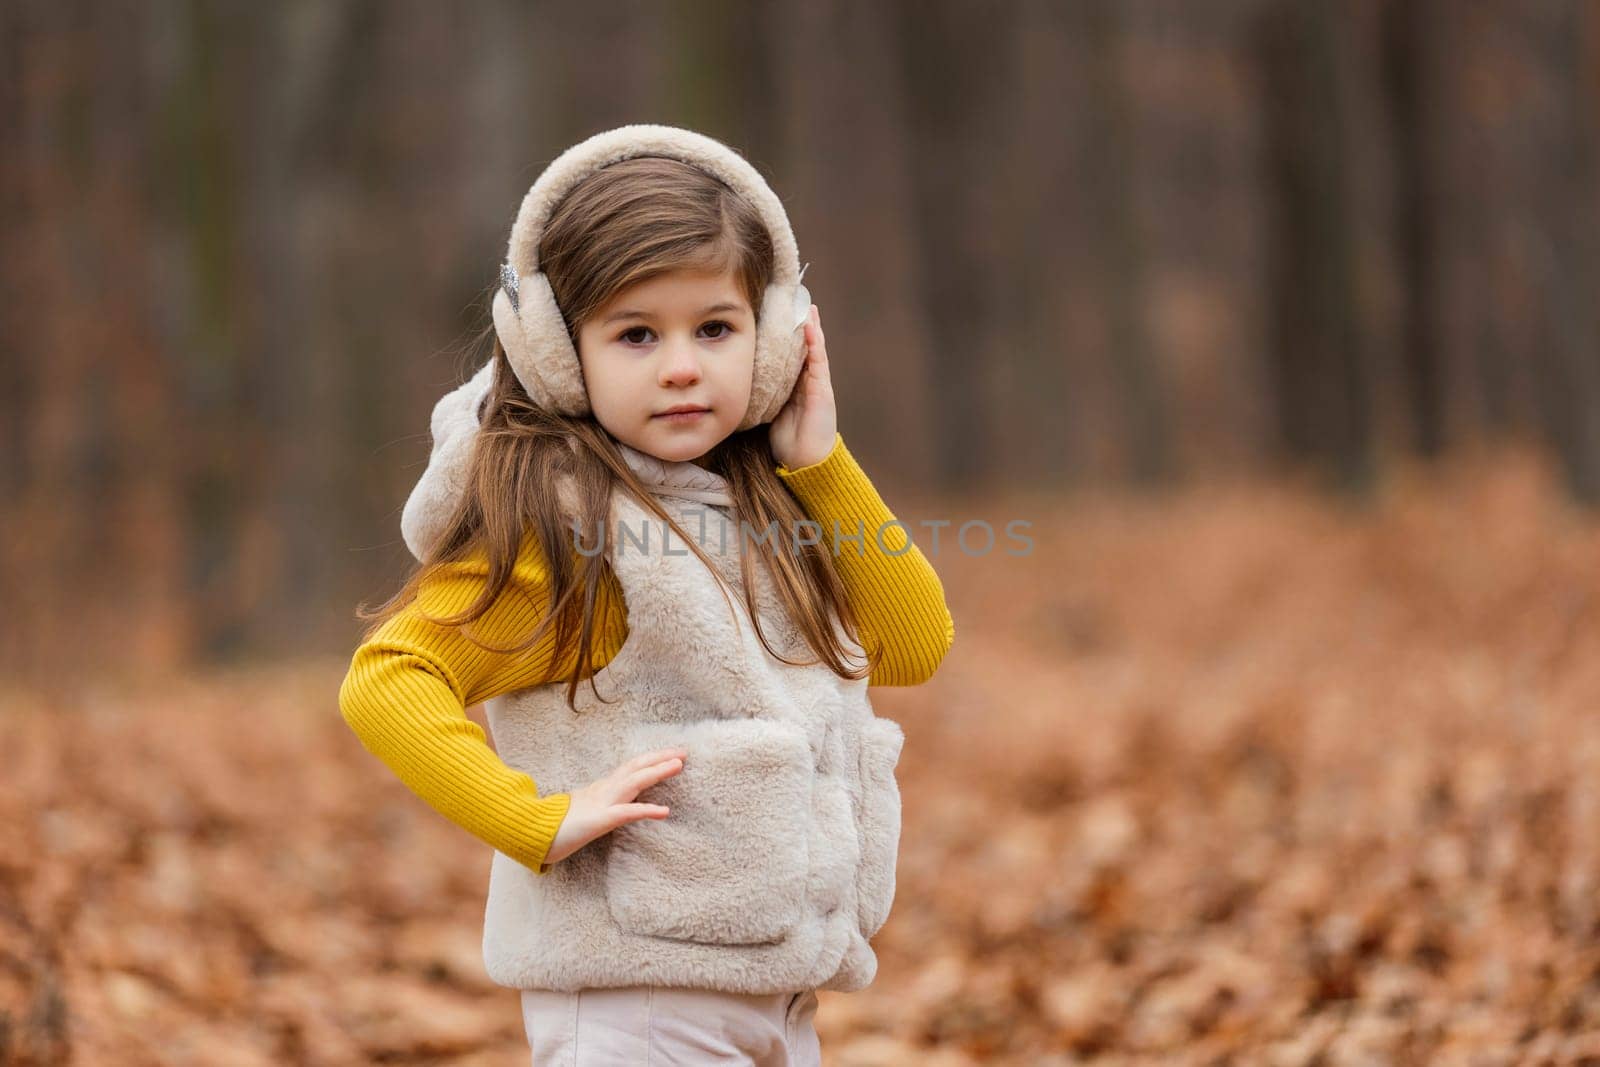 little girl in headphones walks through the autumn forest